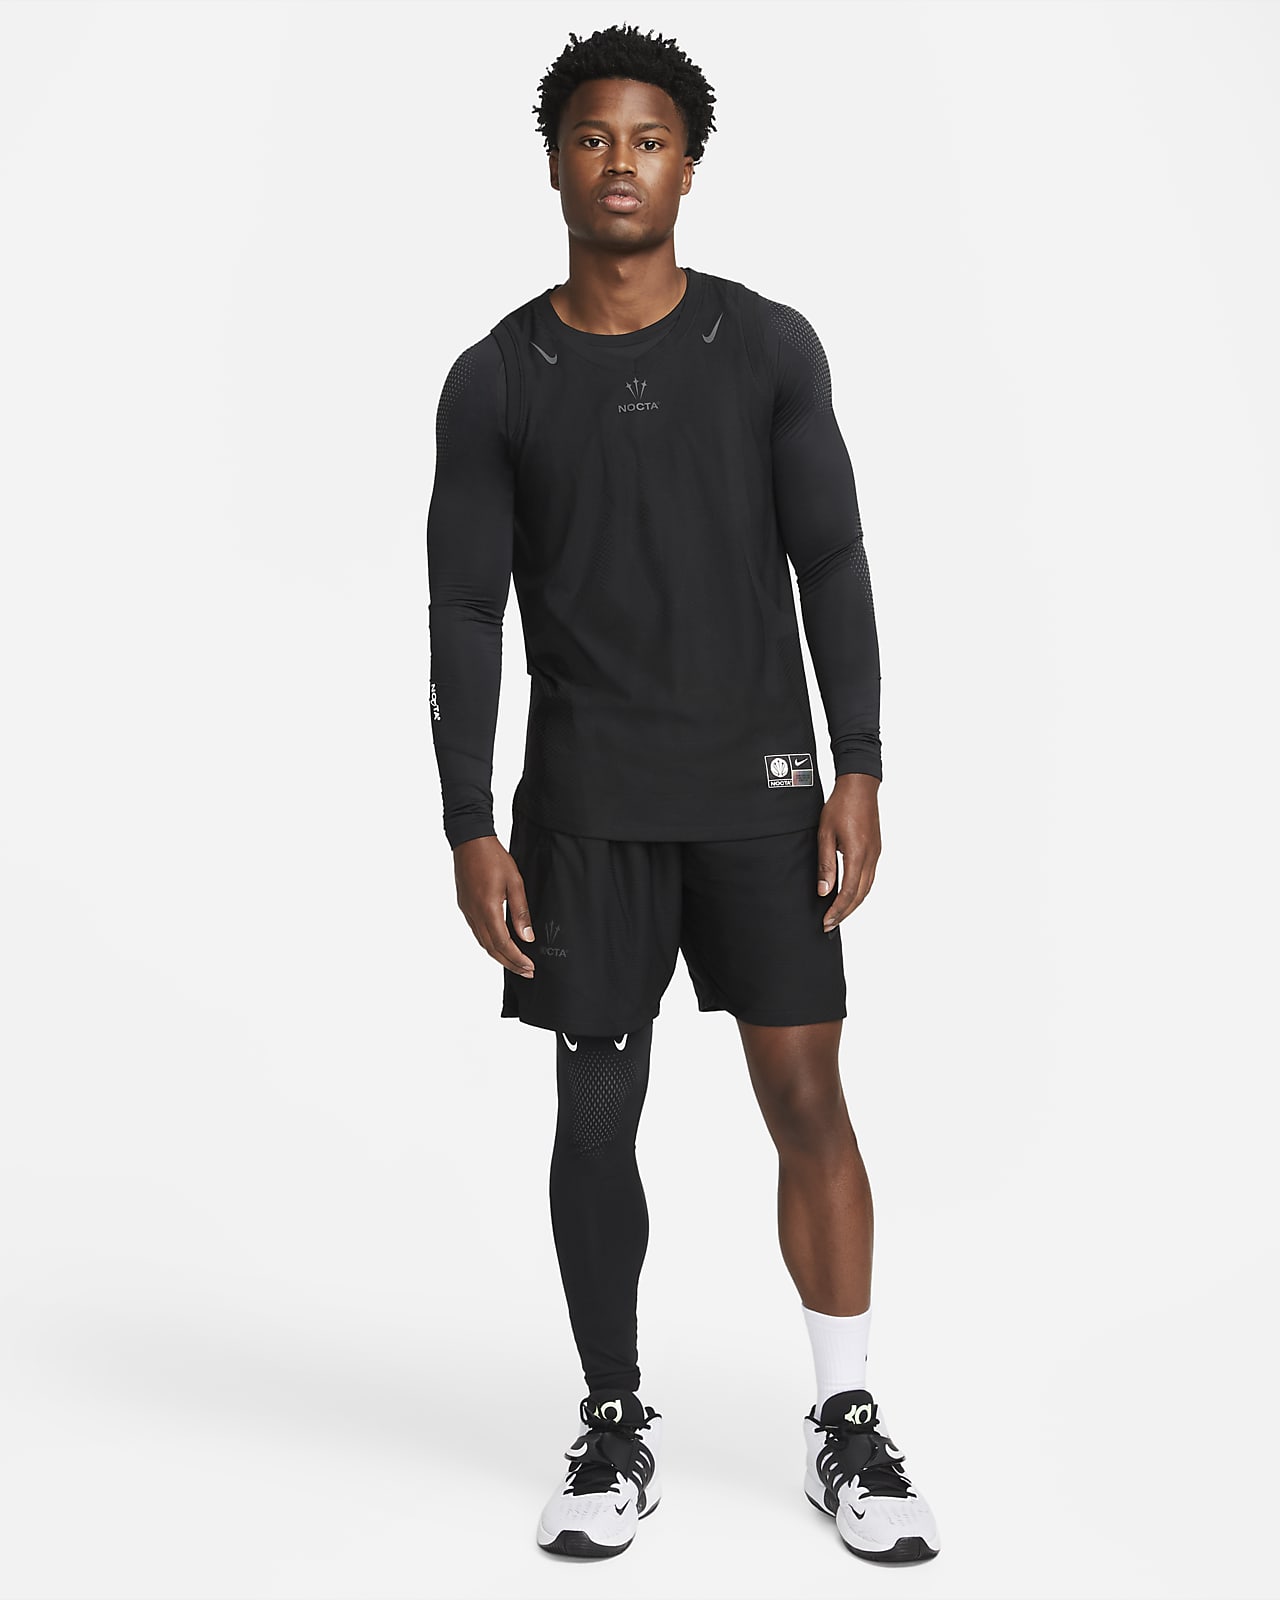 Nike NOCTA Right Leg Sleeve